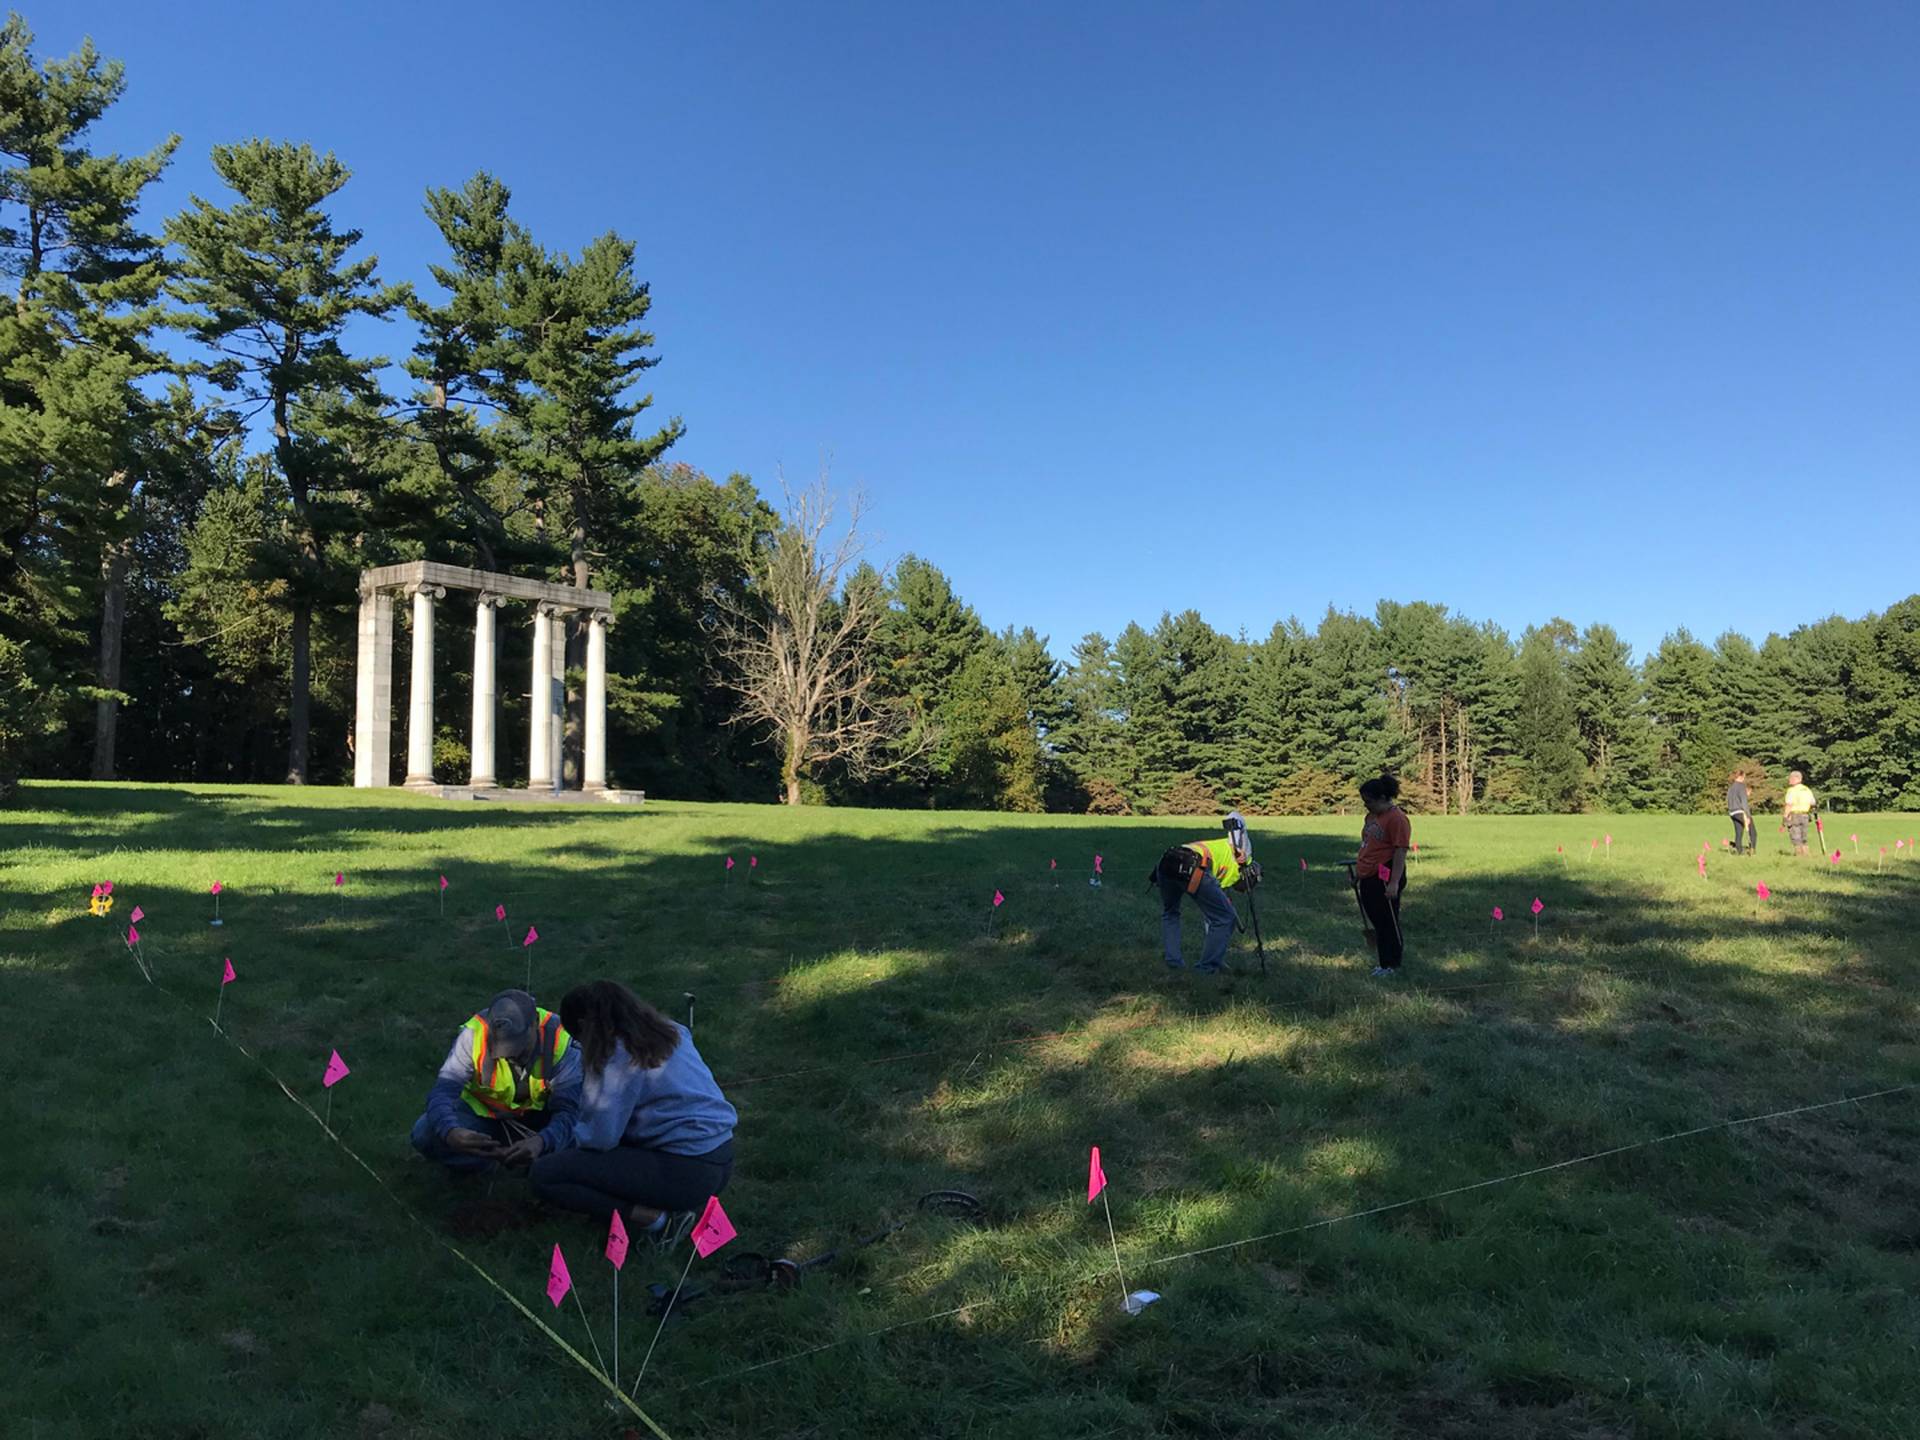 People explore the Princeton Battlefield park